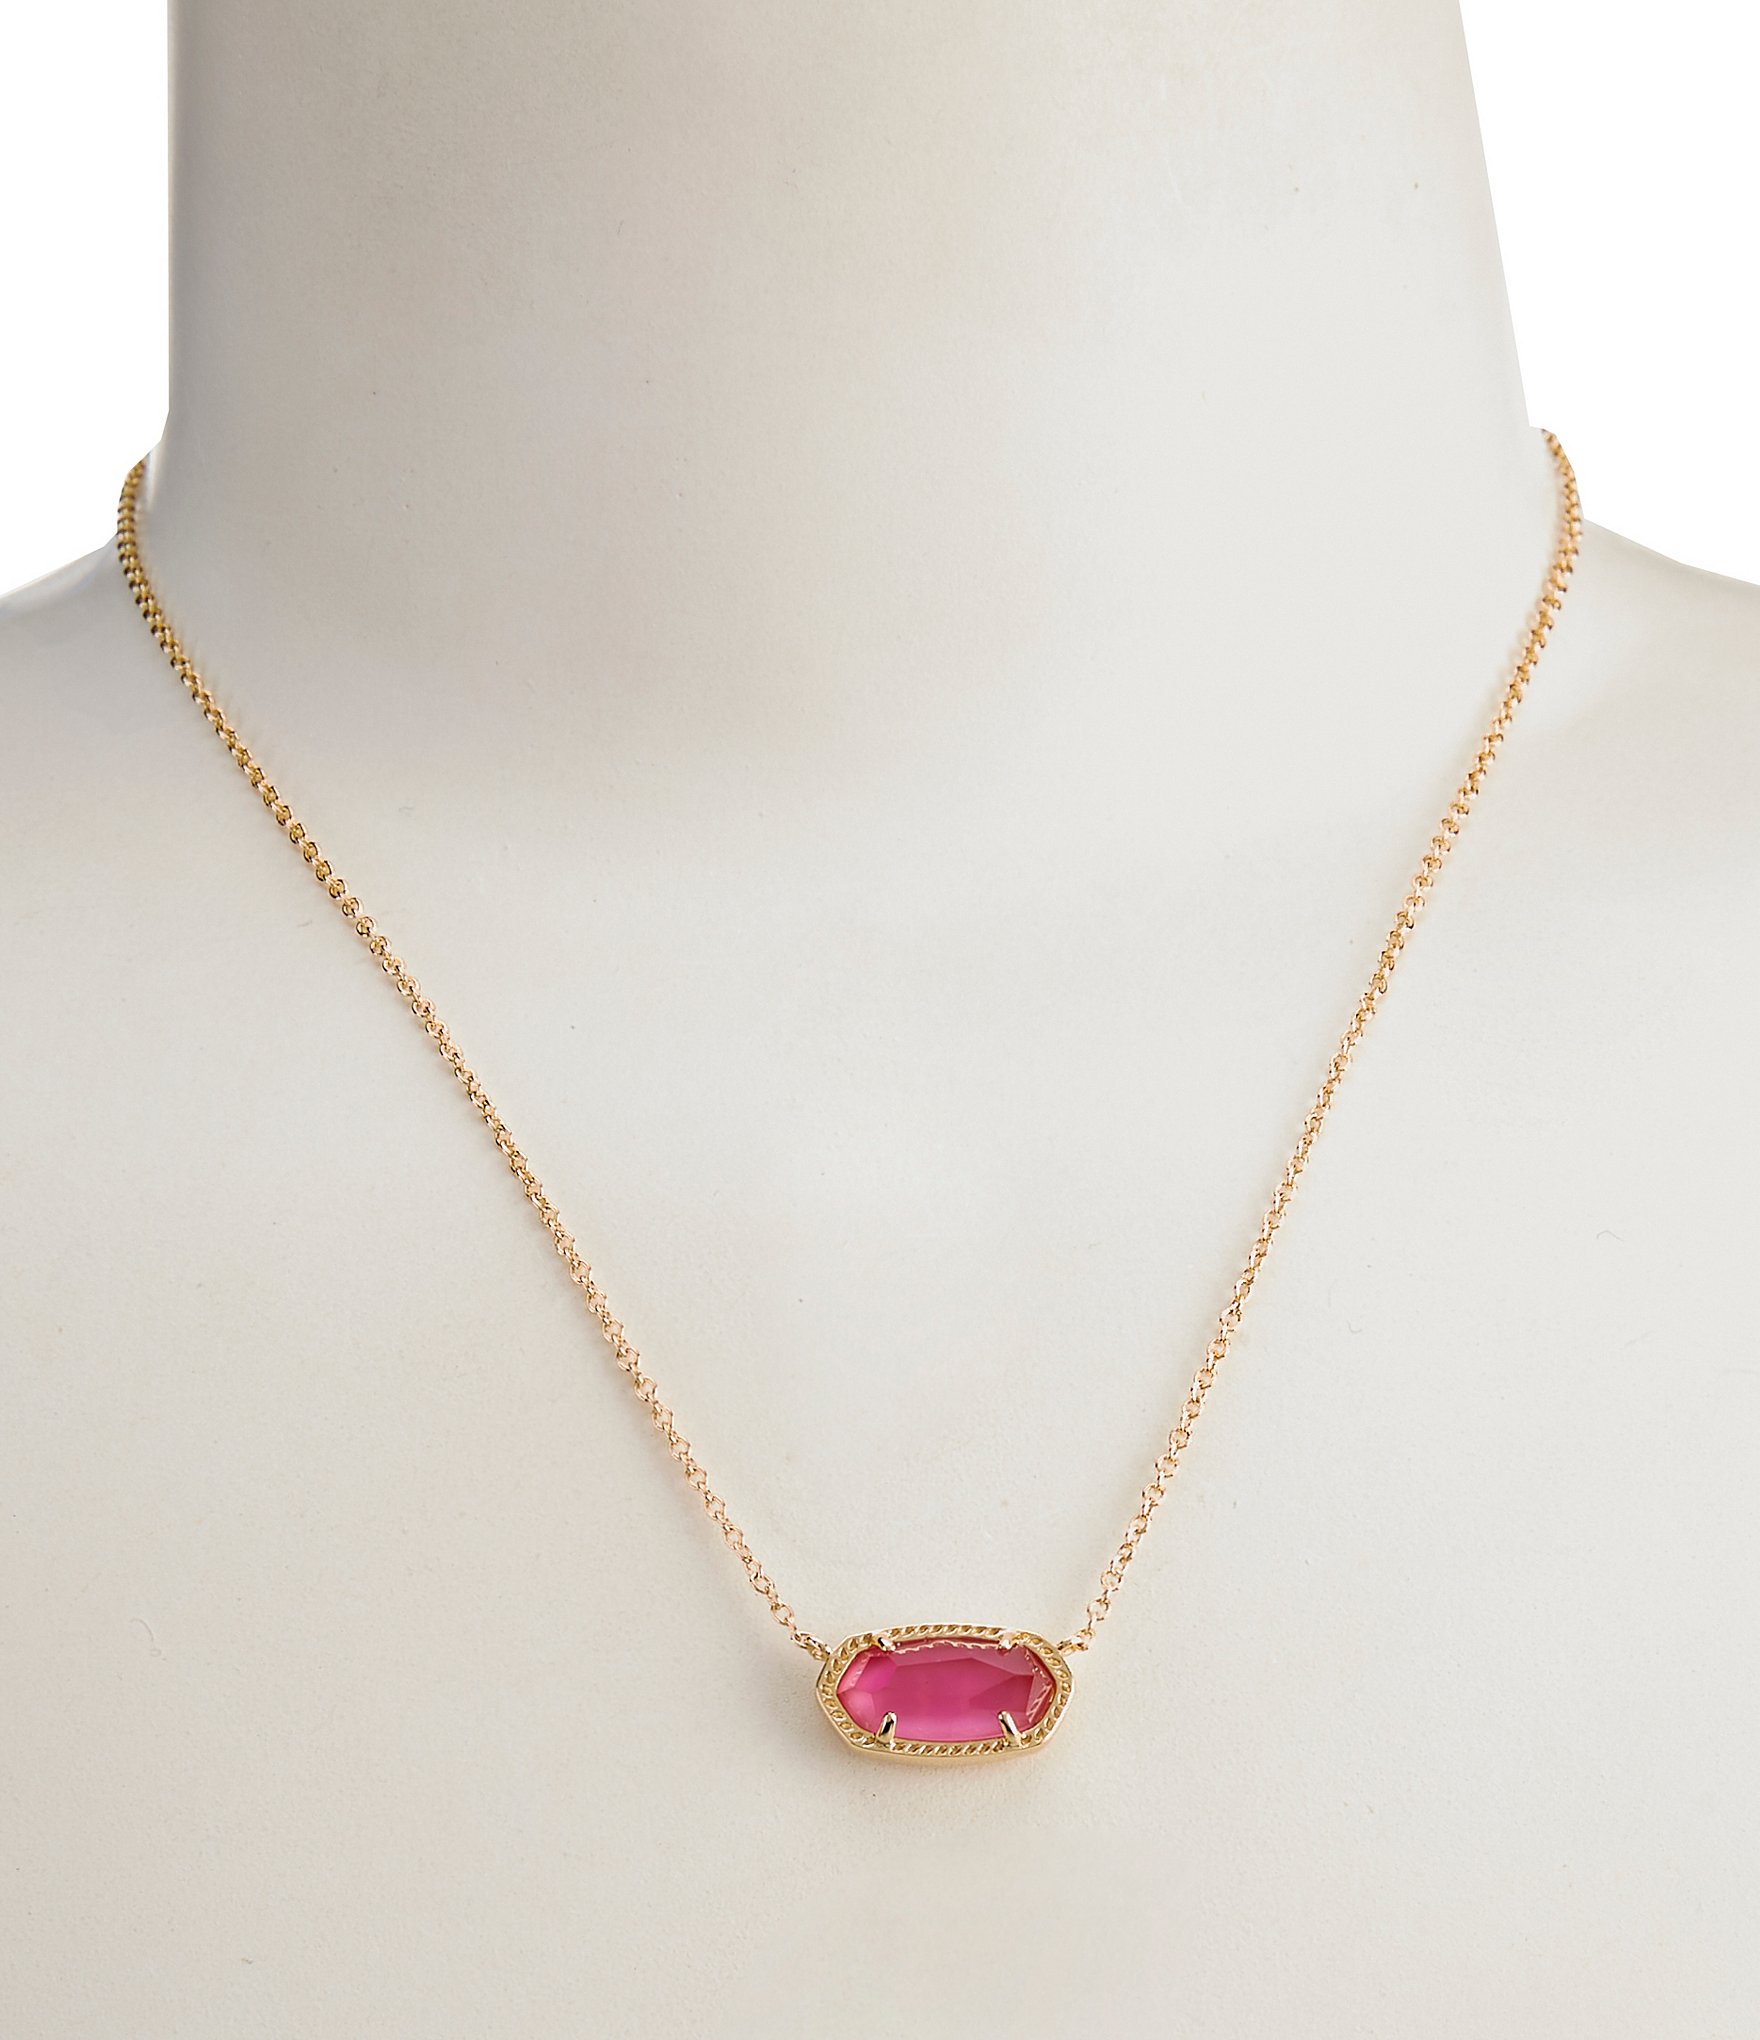 Kendra Scott Ari Heart Pendant Necklace in Iridescent Drusy and Gold | eBay